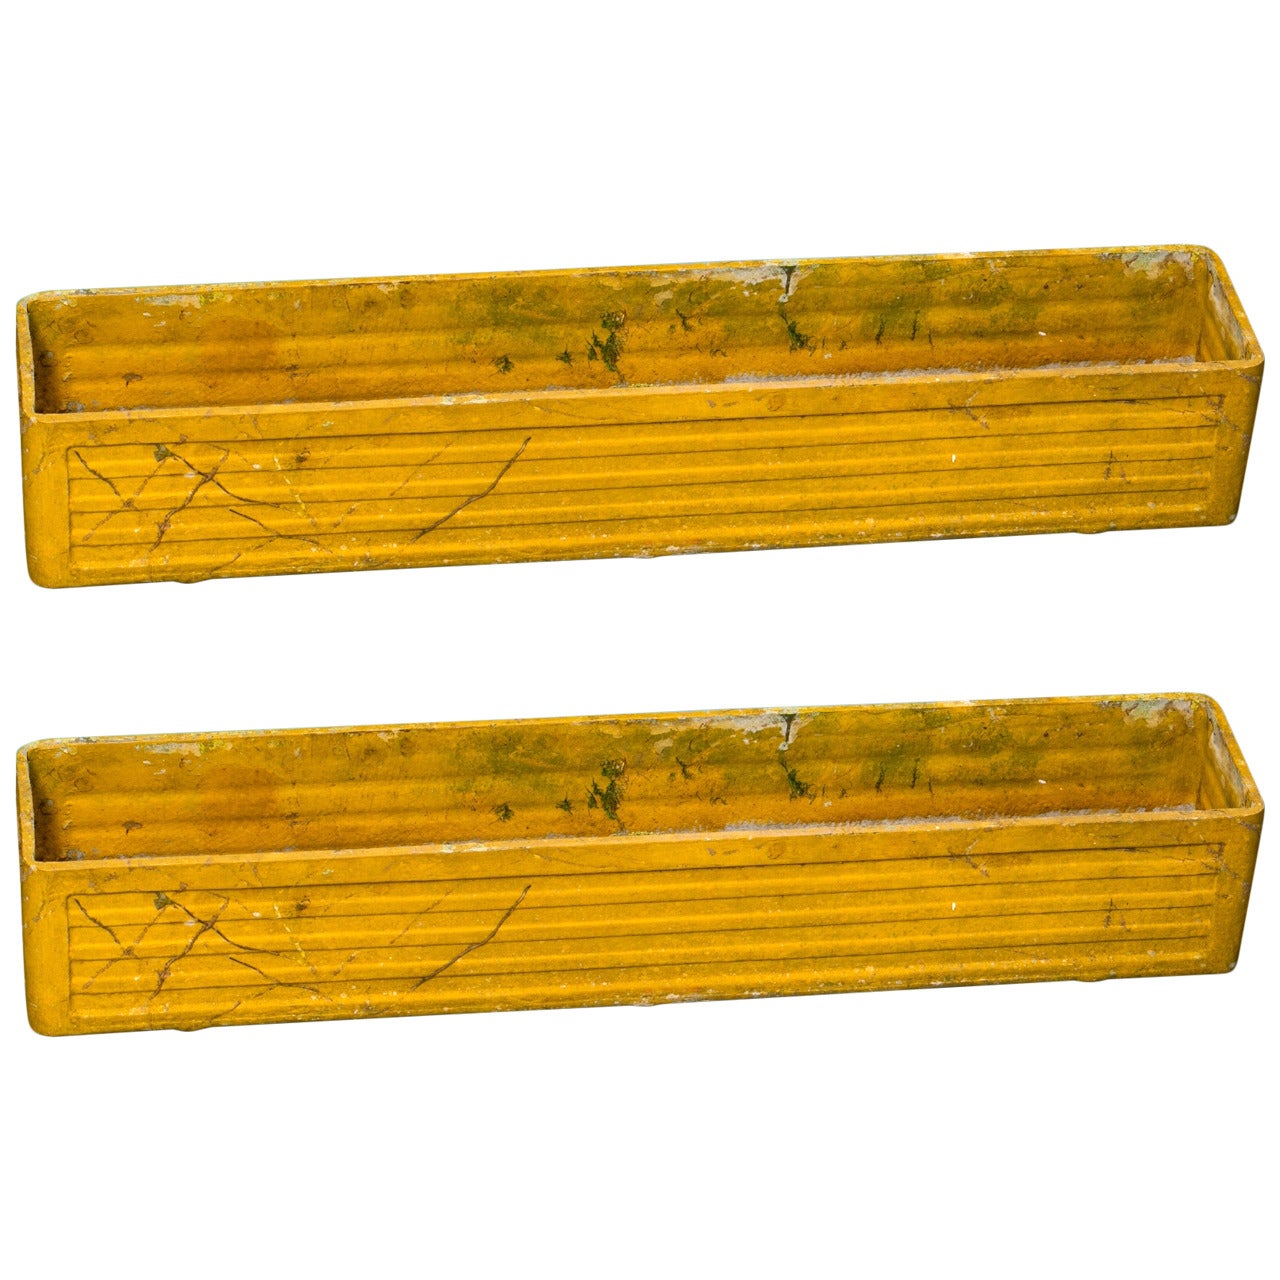 Pair of Willy Guhl Yellow Painted Rectangular Fiber Cement Planters